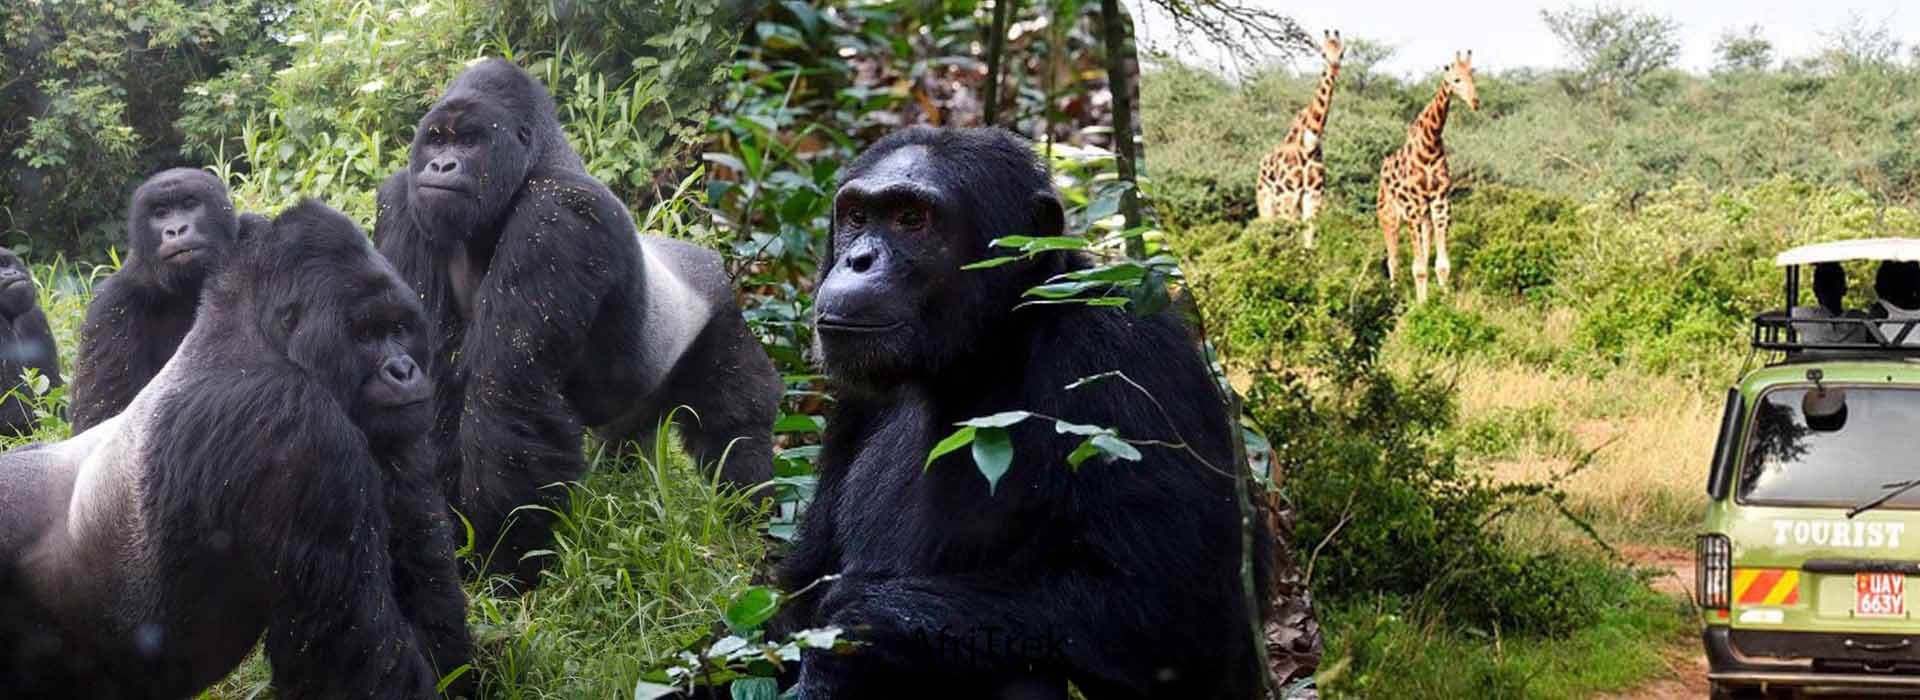 Car hire Uganda 8 Days Wildlife and Primate Safari